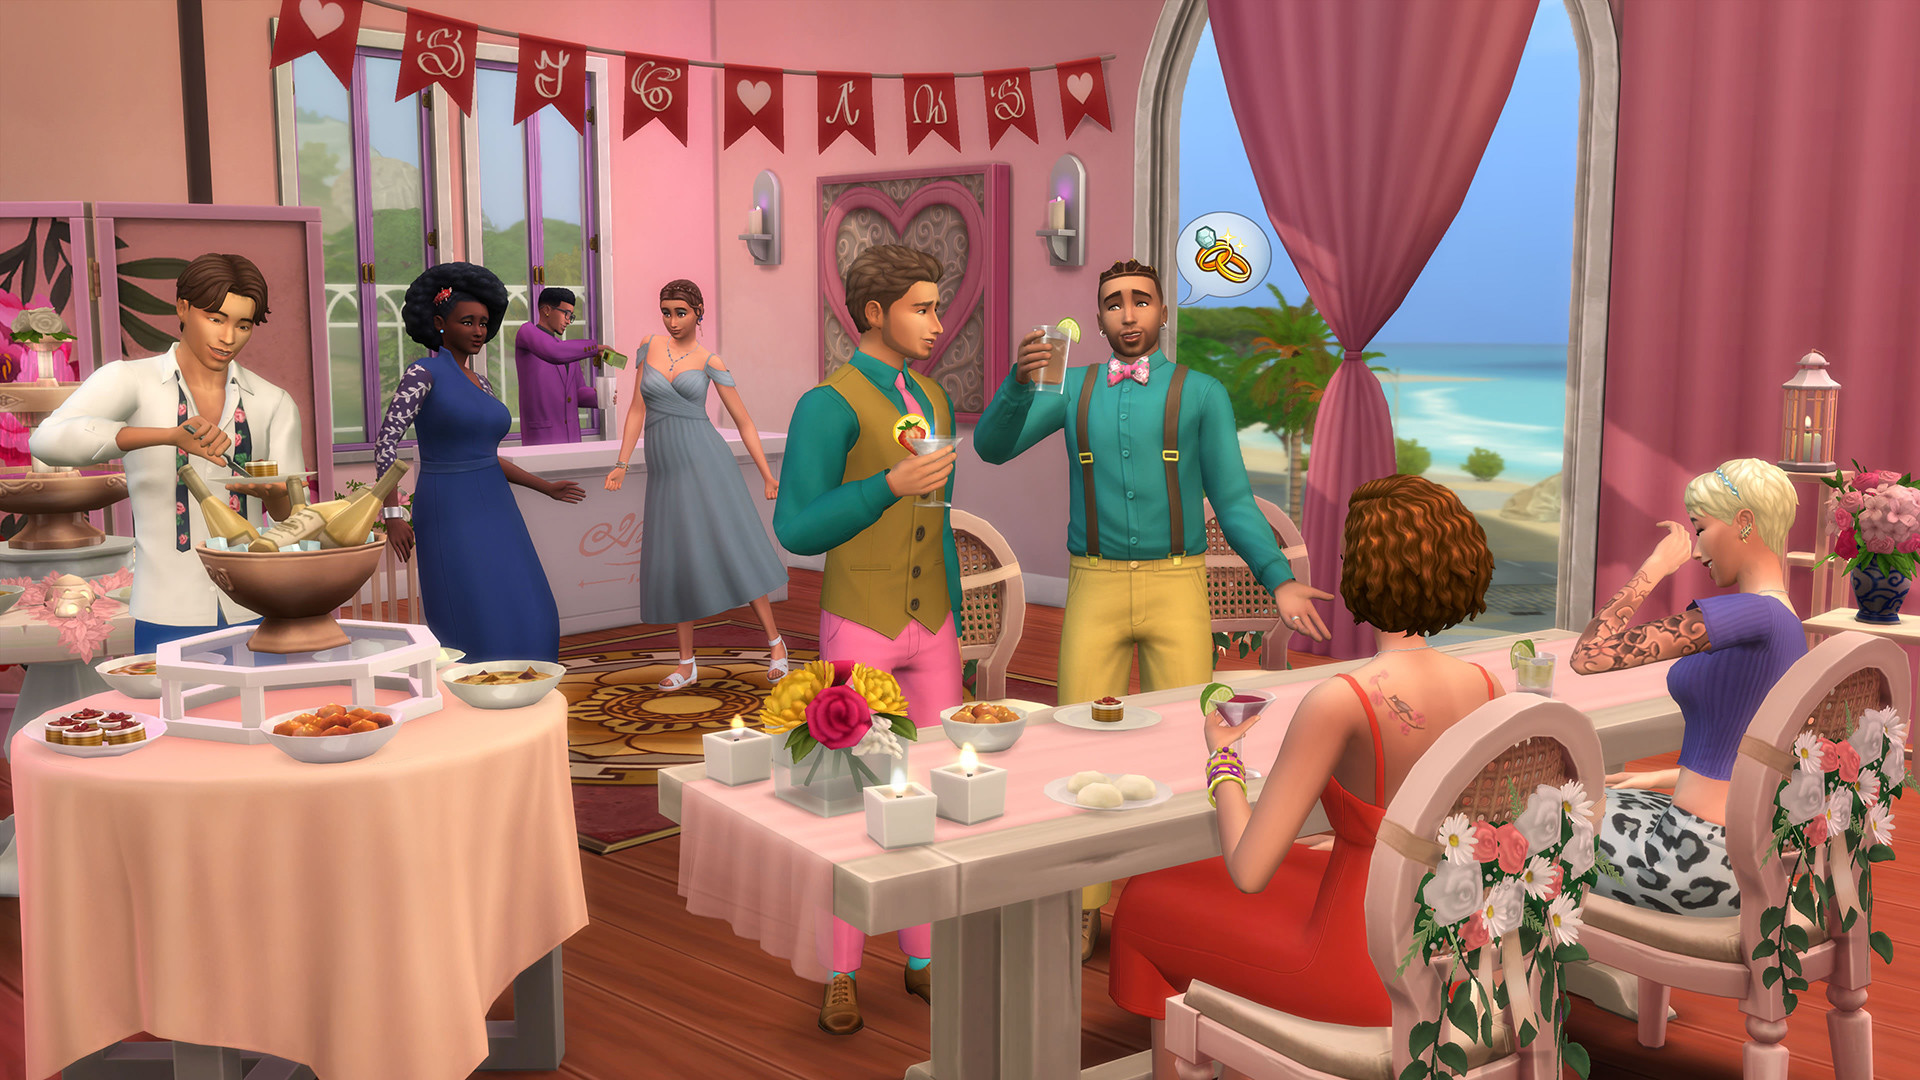 The Sims 4 - My Wedding Stories Game Pack DLC Origin CD Key 18.07$